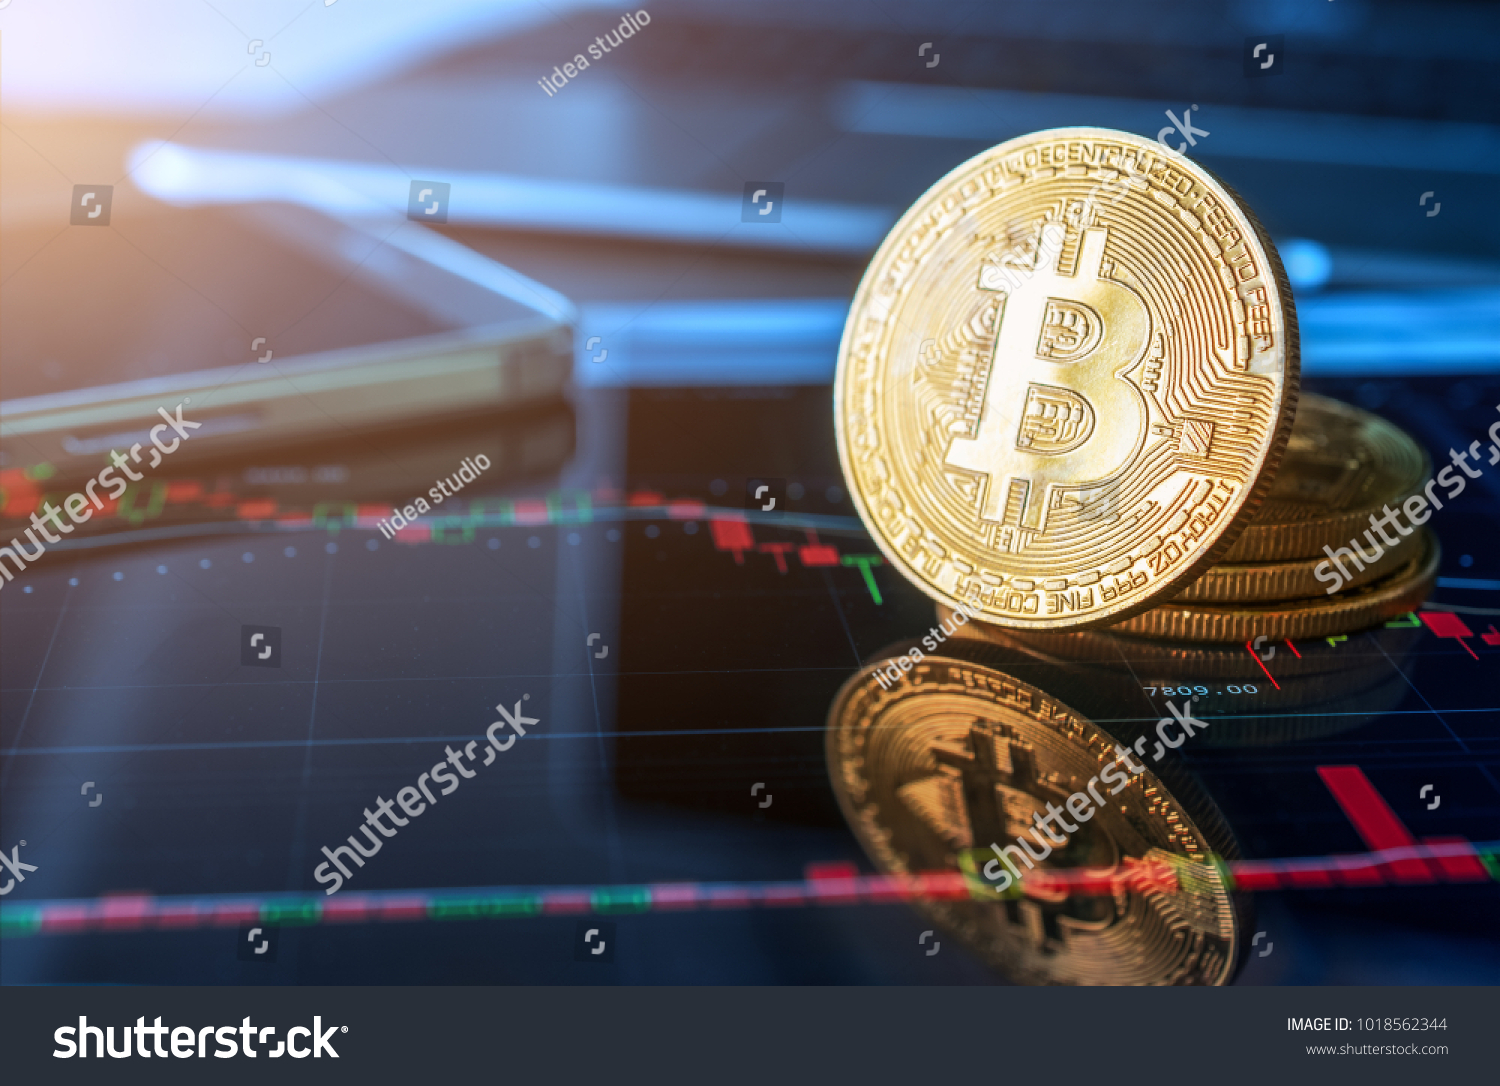 bitcoin get transaction fees